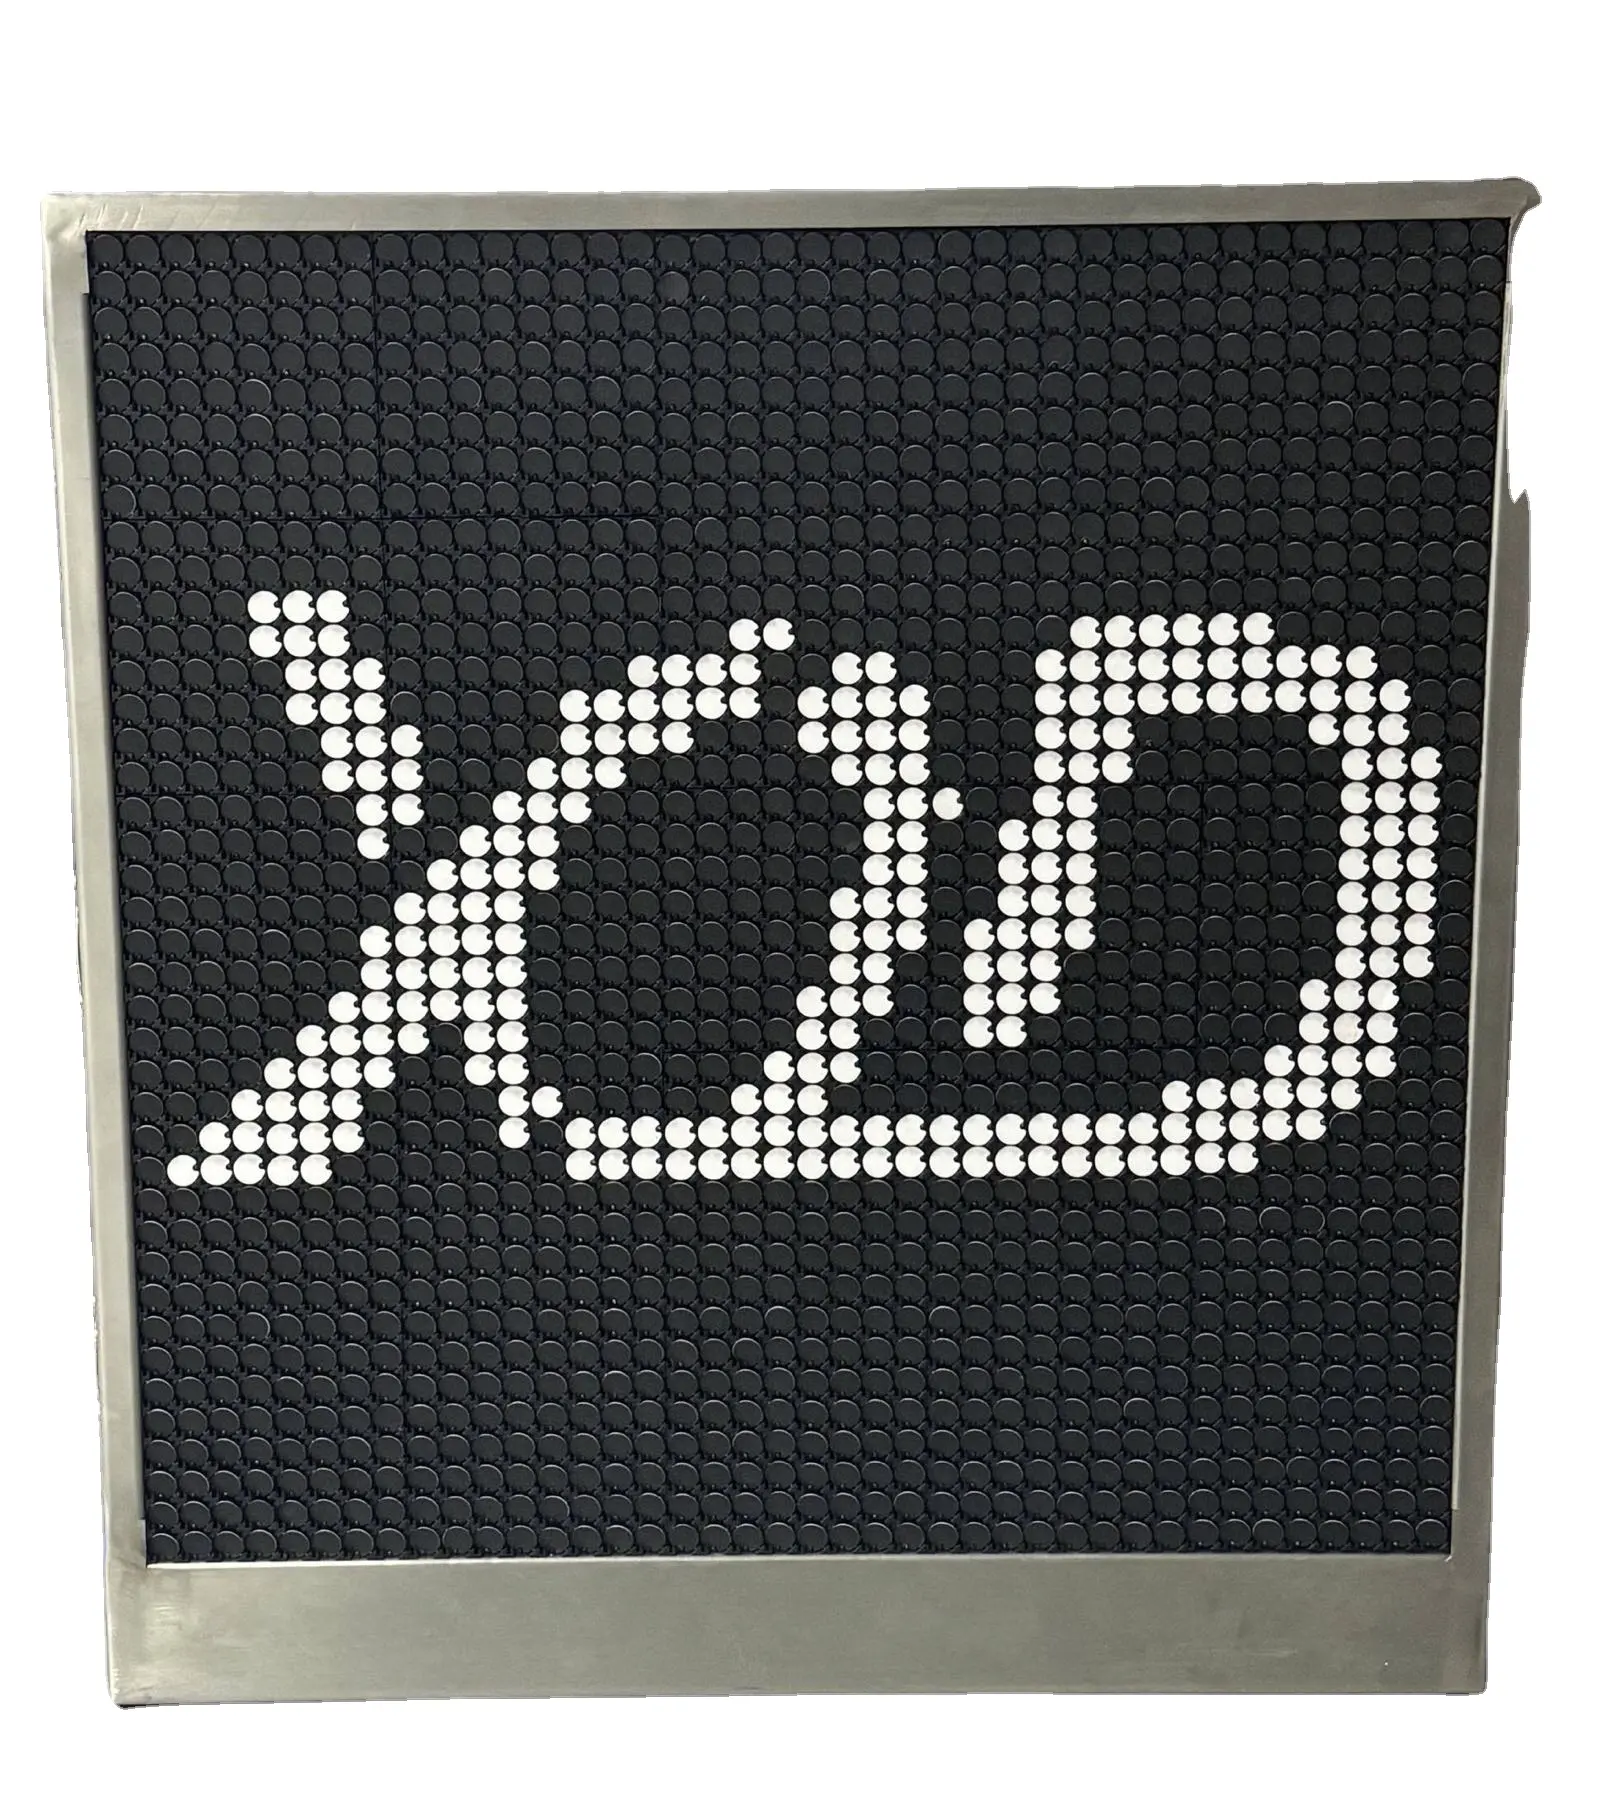 XQD заводская цена новый дизайн цена DC12V DMX Матрица 8x8 светодиодная цифровая реклама дисплей для такси